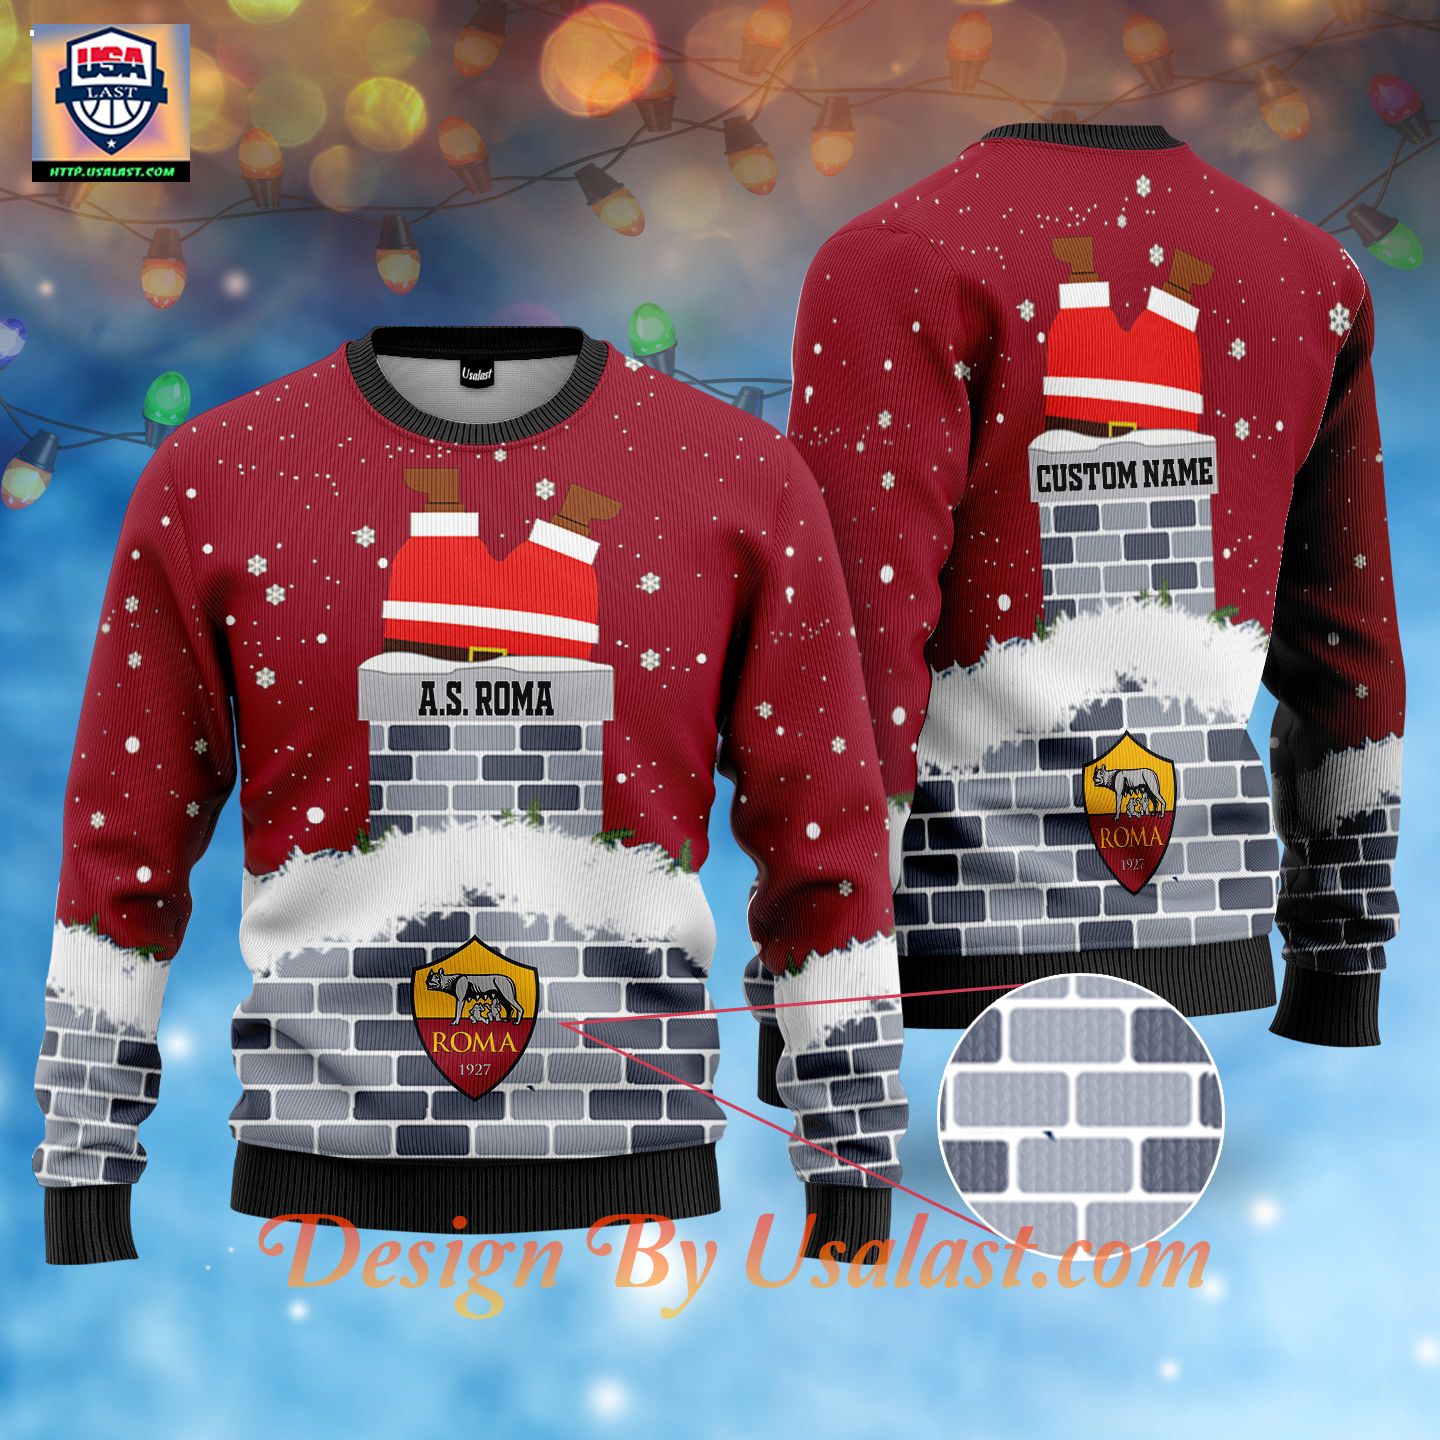 a-s-roma-santa-claus-custom-name-ugly-christmas-sweater-1-vgjwS.jpg